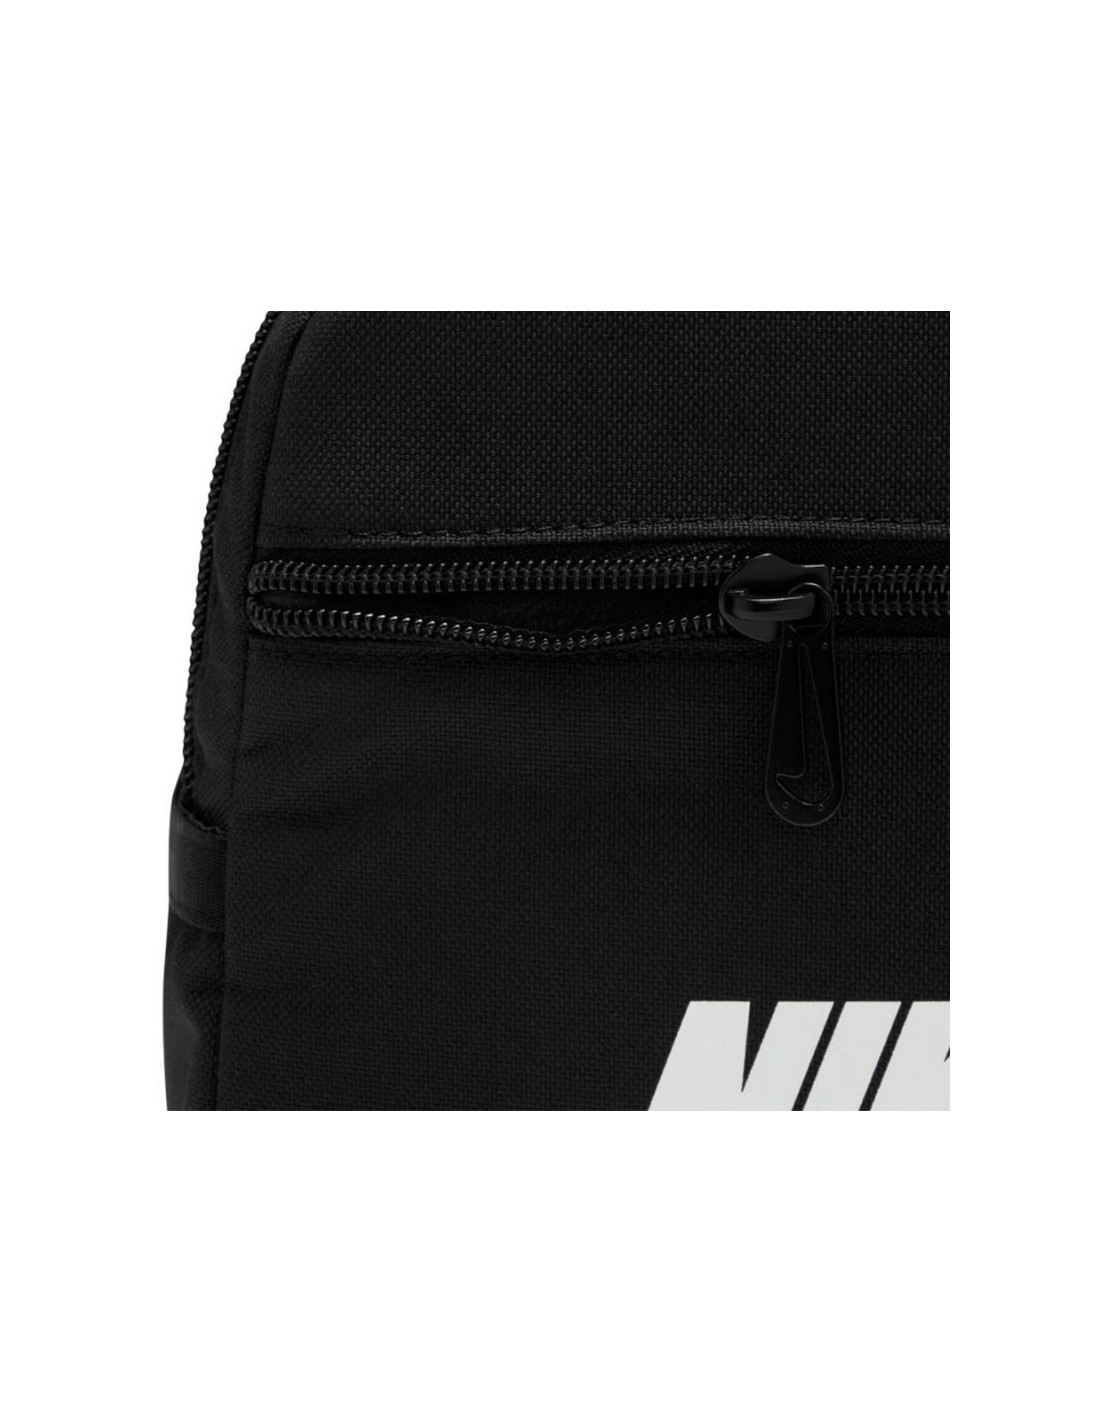 Backpack Nike Sportswear Futura 365 Mini CW9301 010